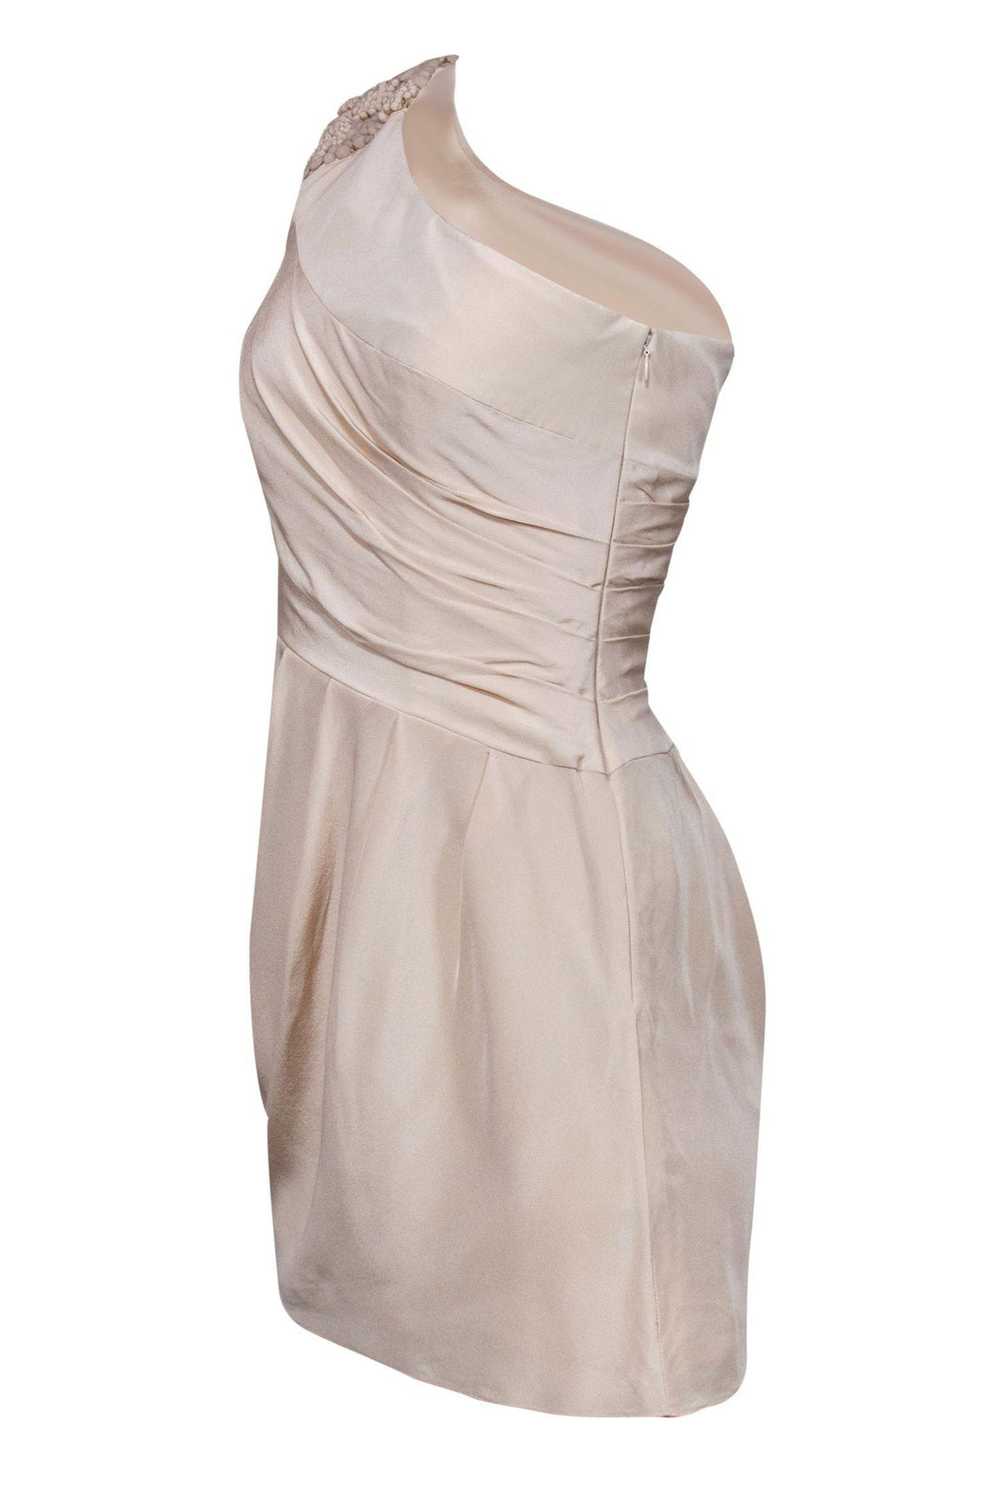 Tibi - Cream Satin One-Shoulder Beaded Dress Sz 4 - image 3